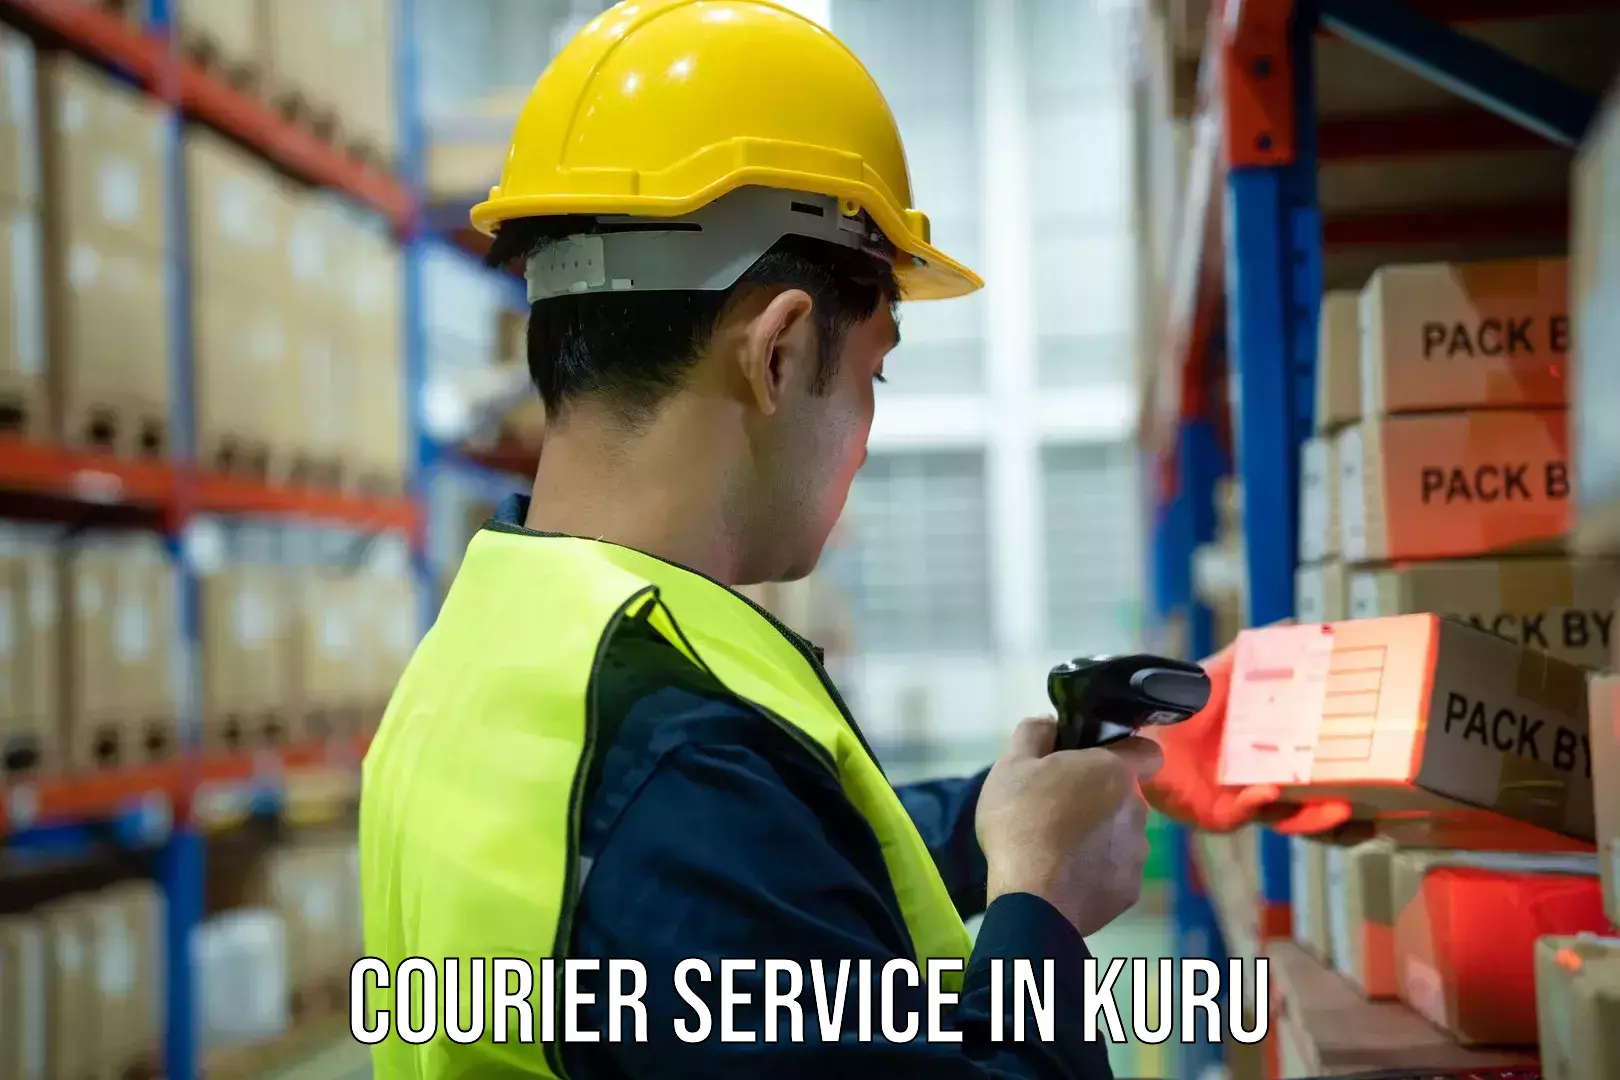 Efficient package consolidation in Kuru